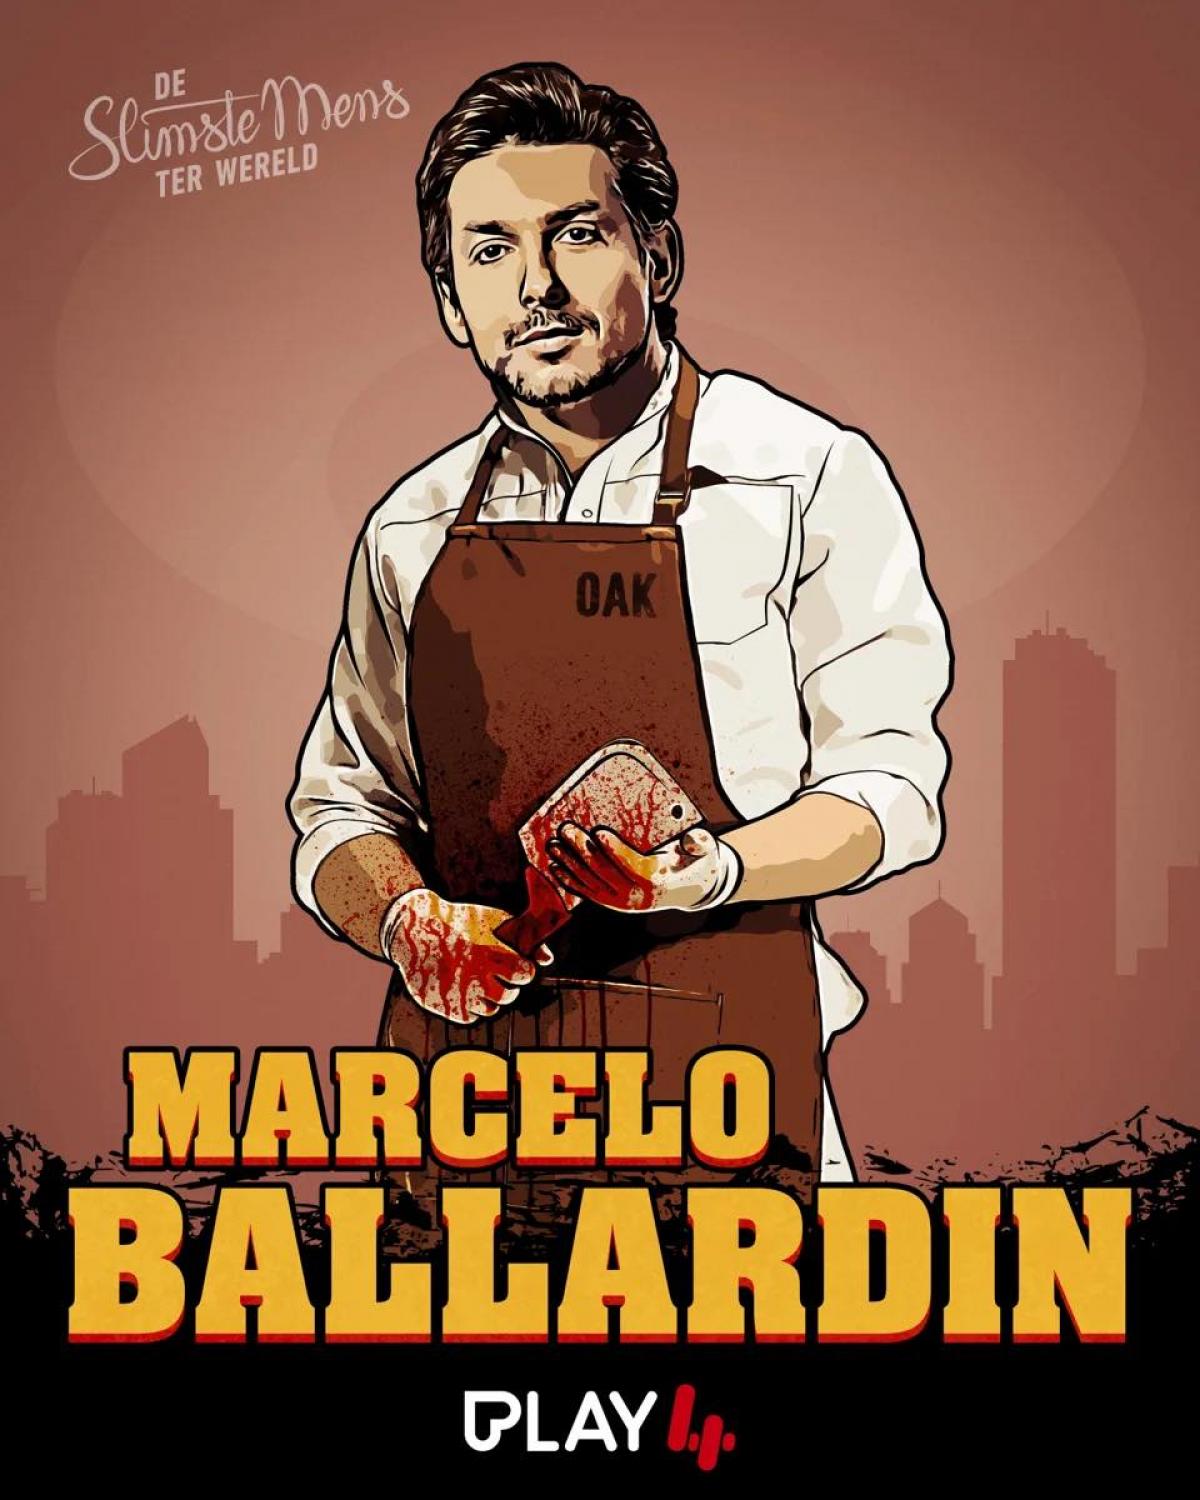 Chef-kok Marcelo Ballardin